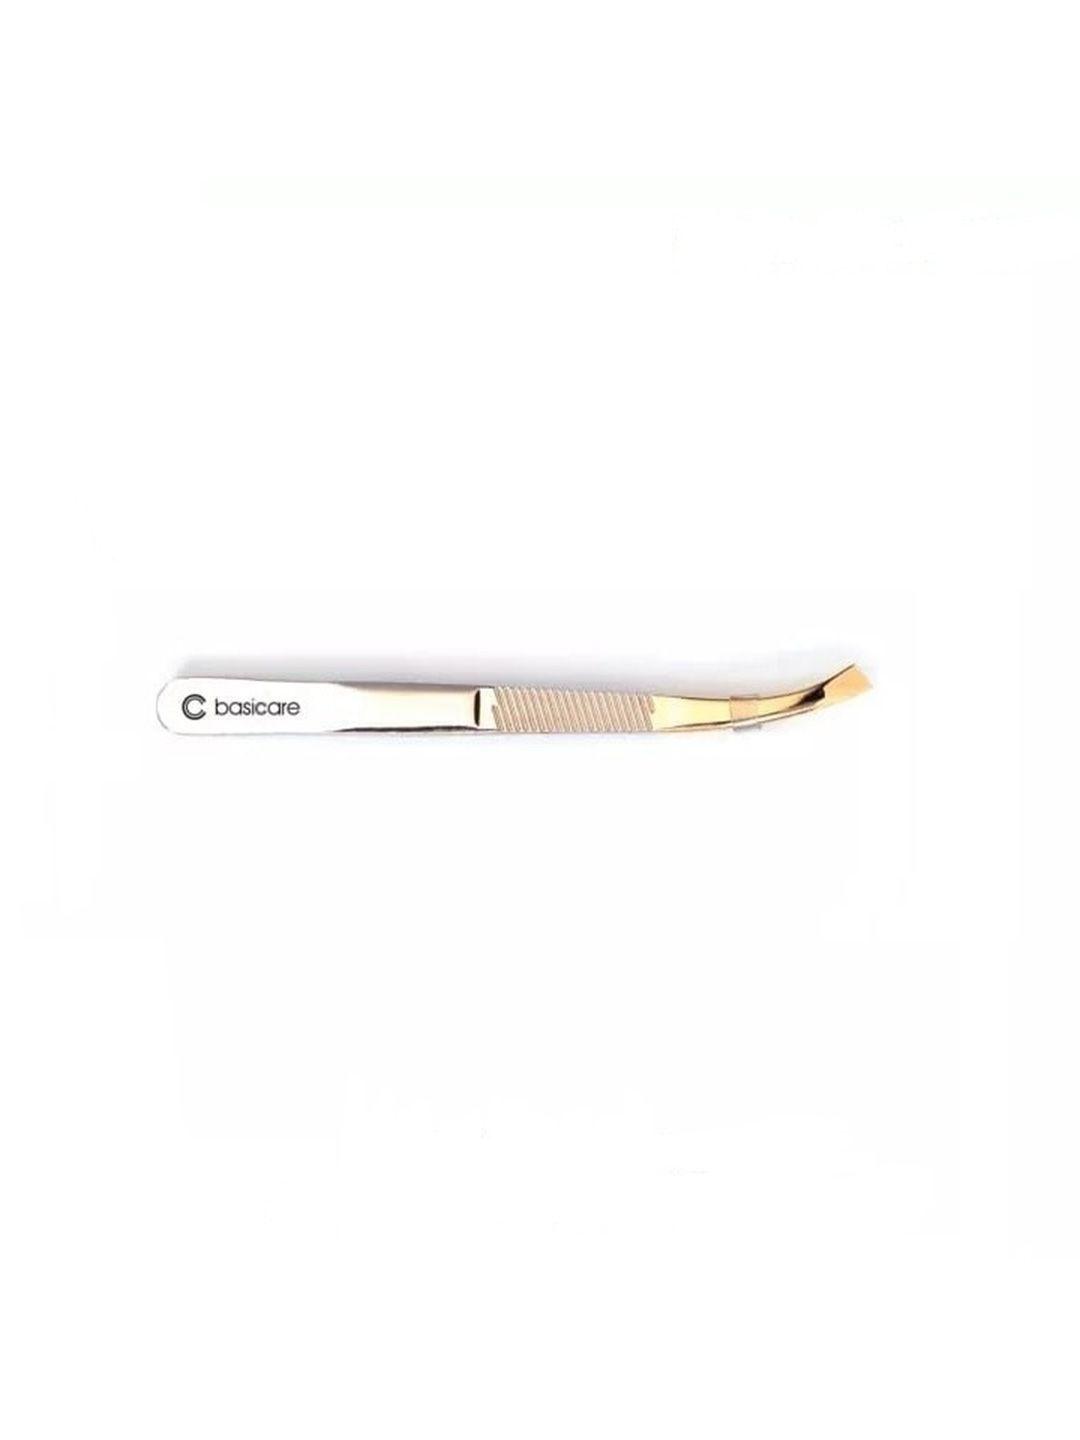 basicare precision ground curved slant tips gold blade tweezers